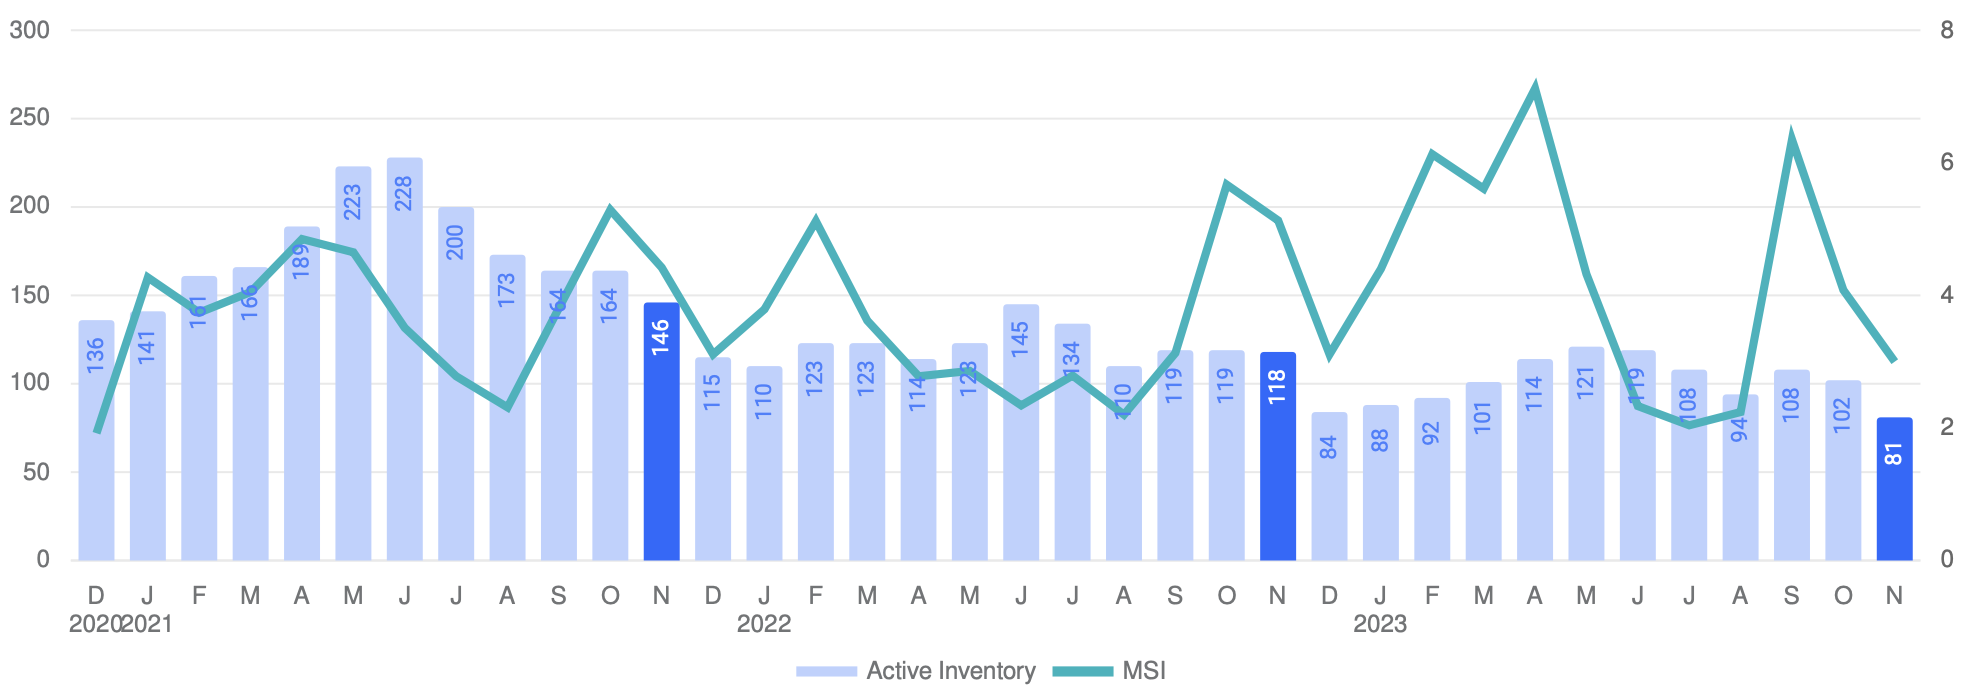 Inventory and MSI in Westport, CT real estate in November 2023